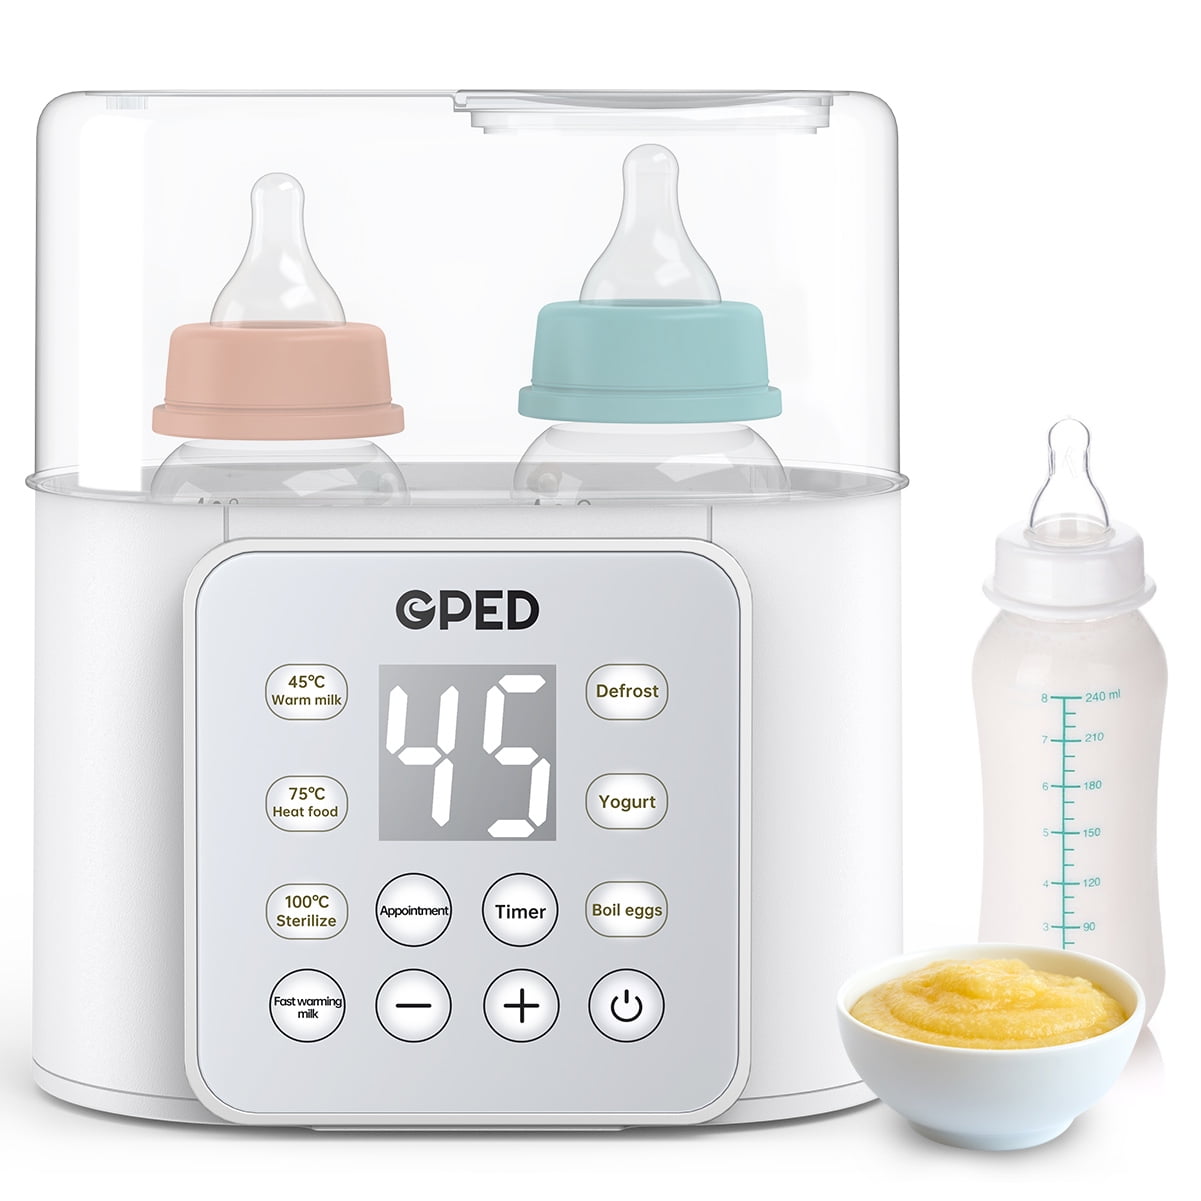 Economic Infant Baby Milk Bottle Temperature Test Strip Thermometer StickerWQDE 